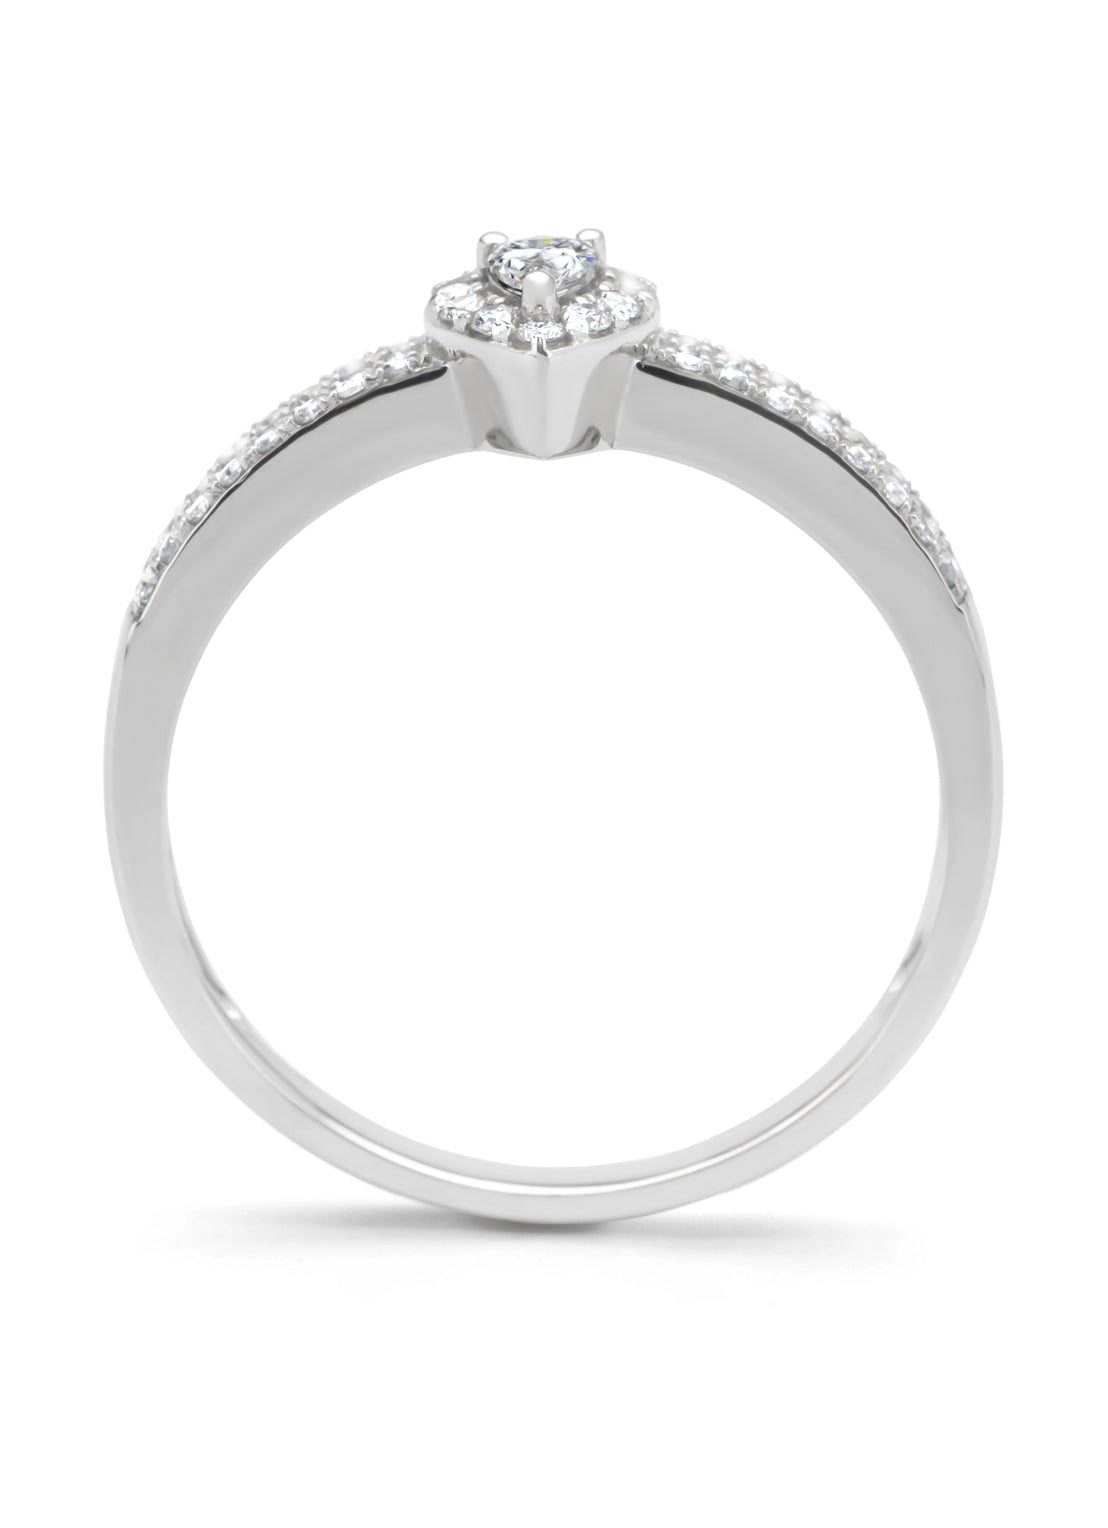 White gold ring, 0.25 ct diamond, petite romance